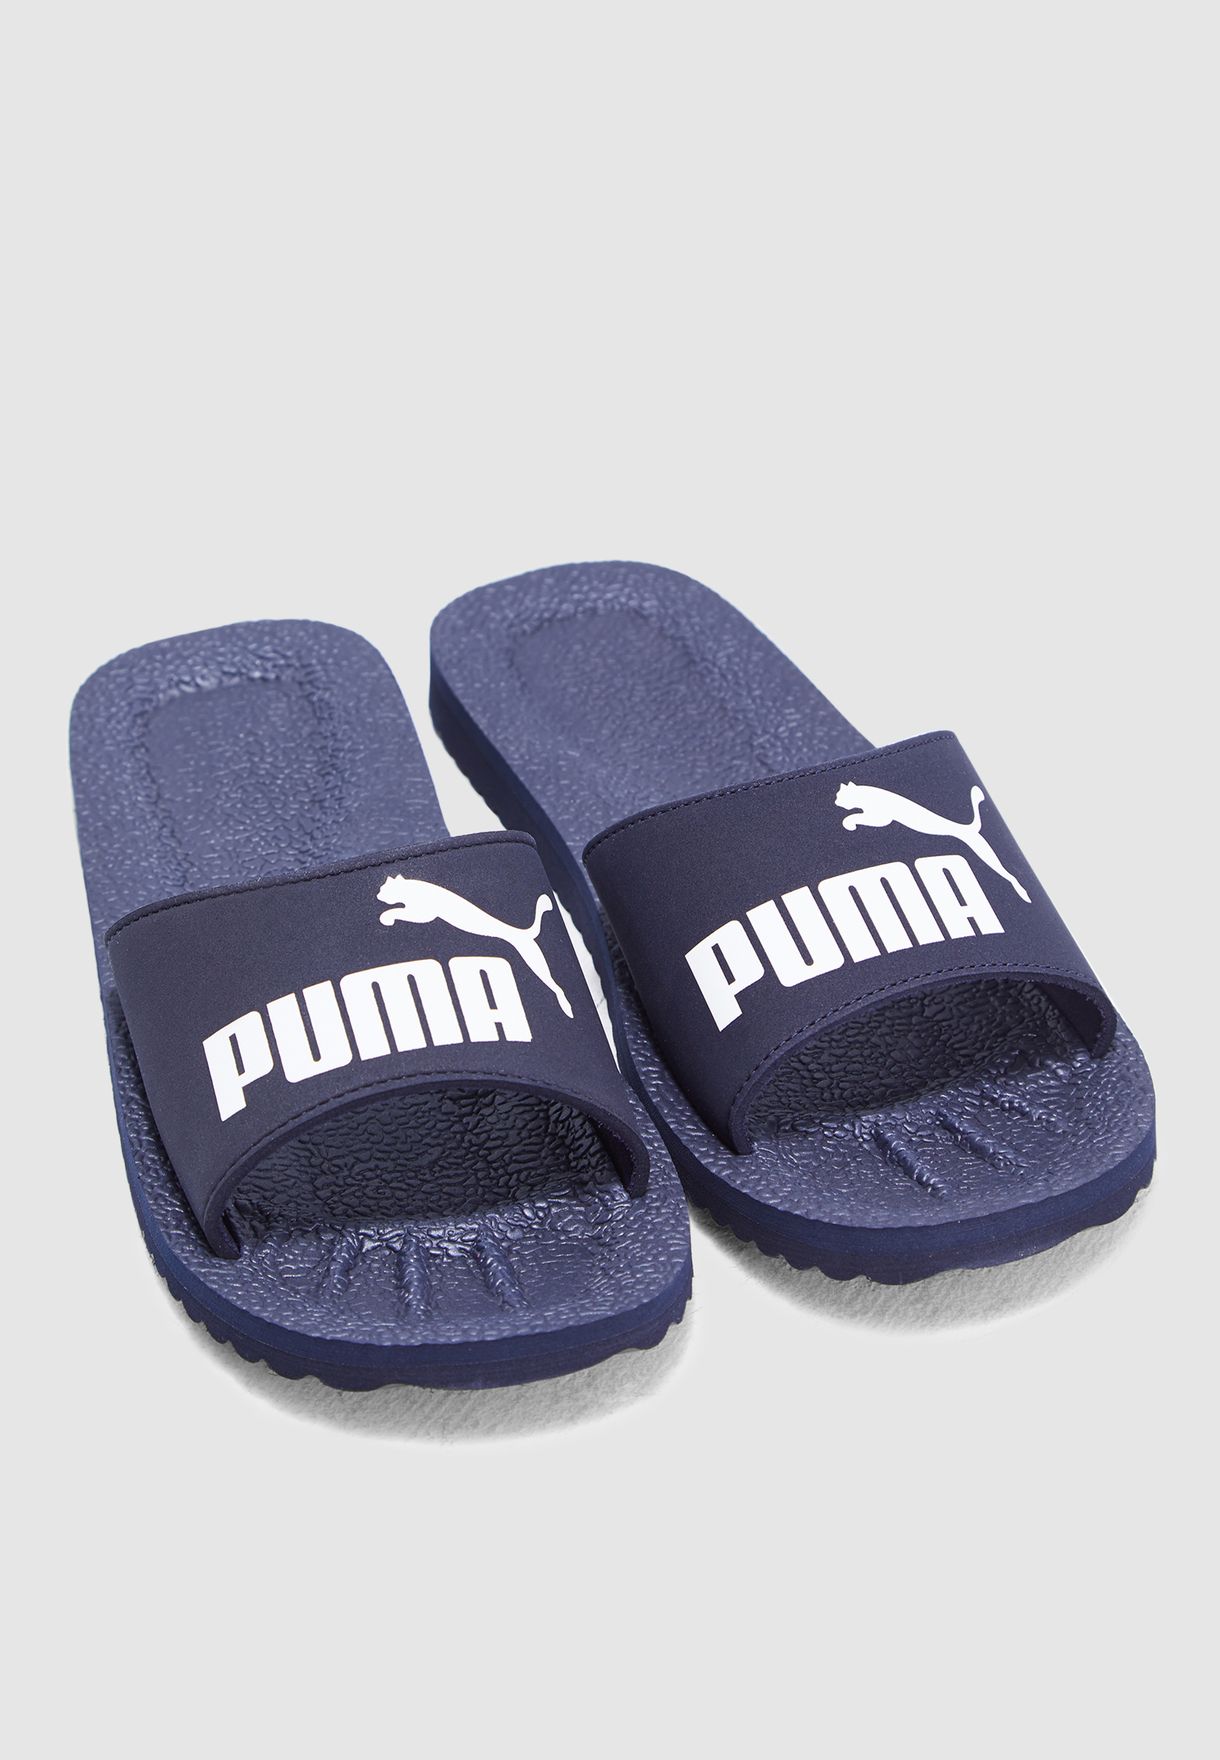 puma purecat slides